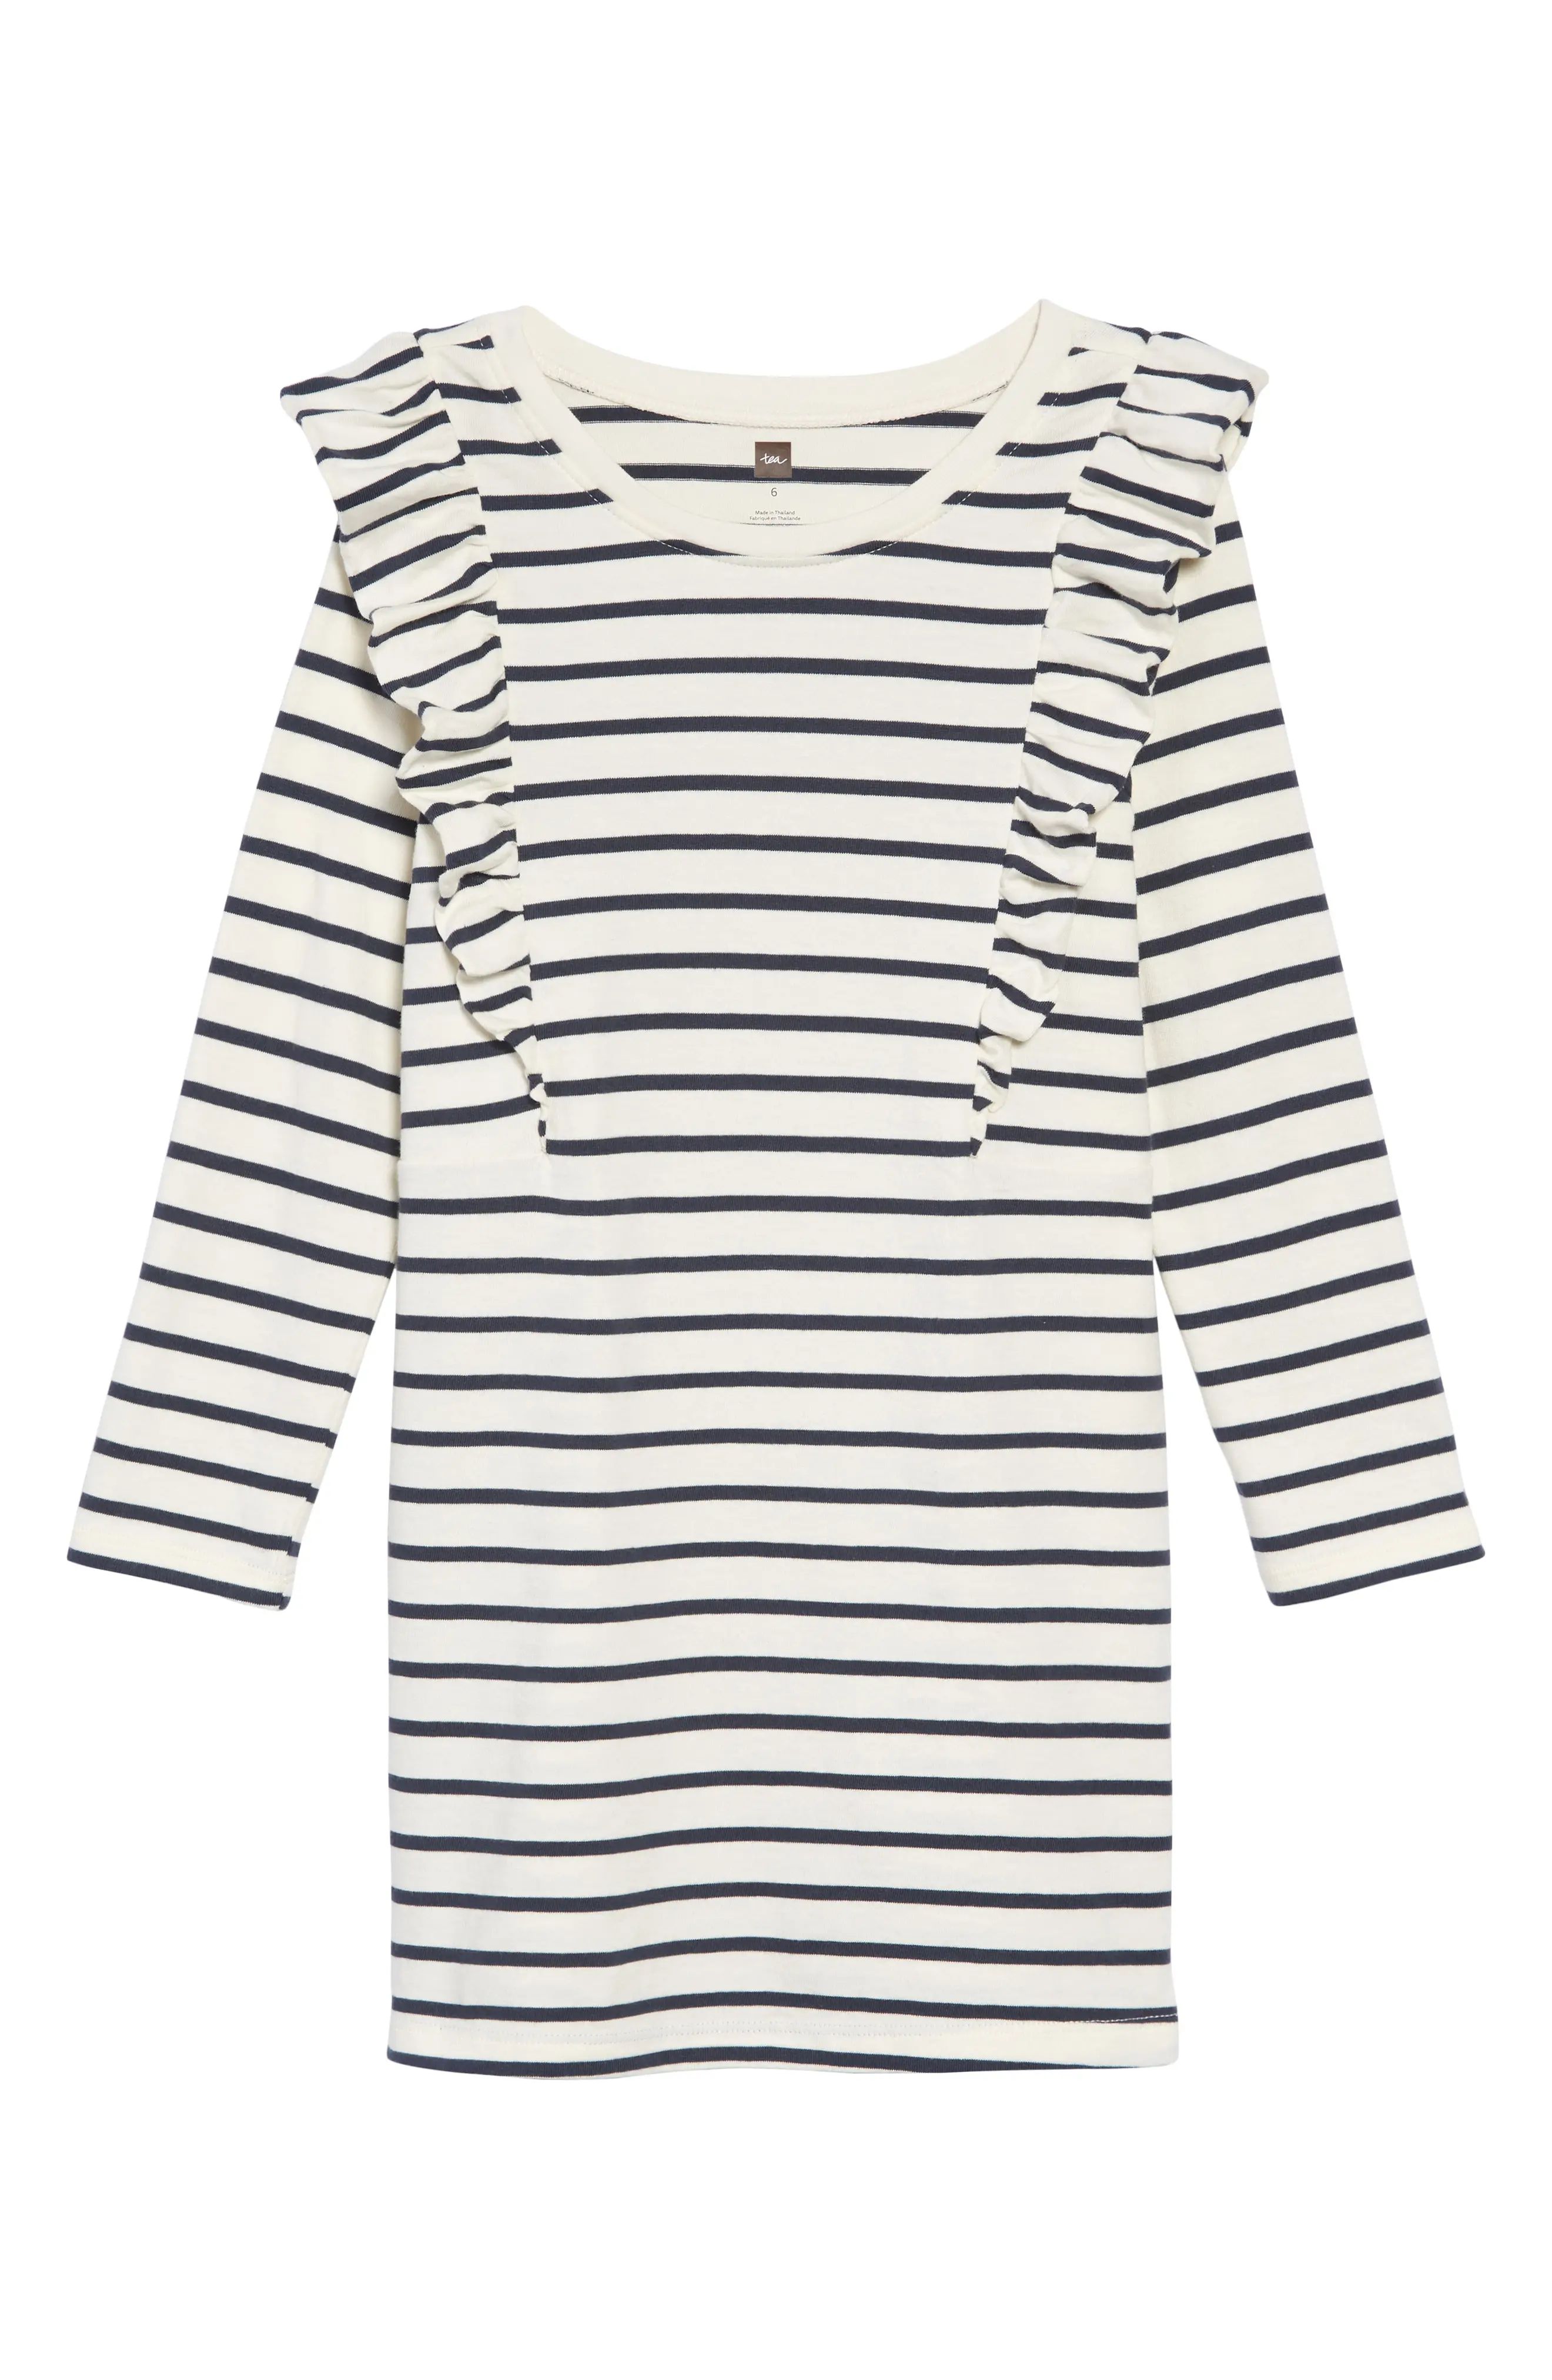 Tea Collection Stripe Ruffle Dress (Toddler Girls, Little Girls & Big Girls) | Nordstrom